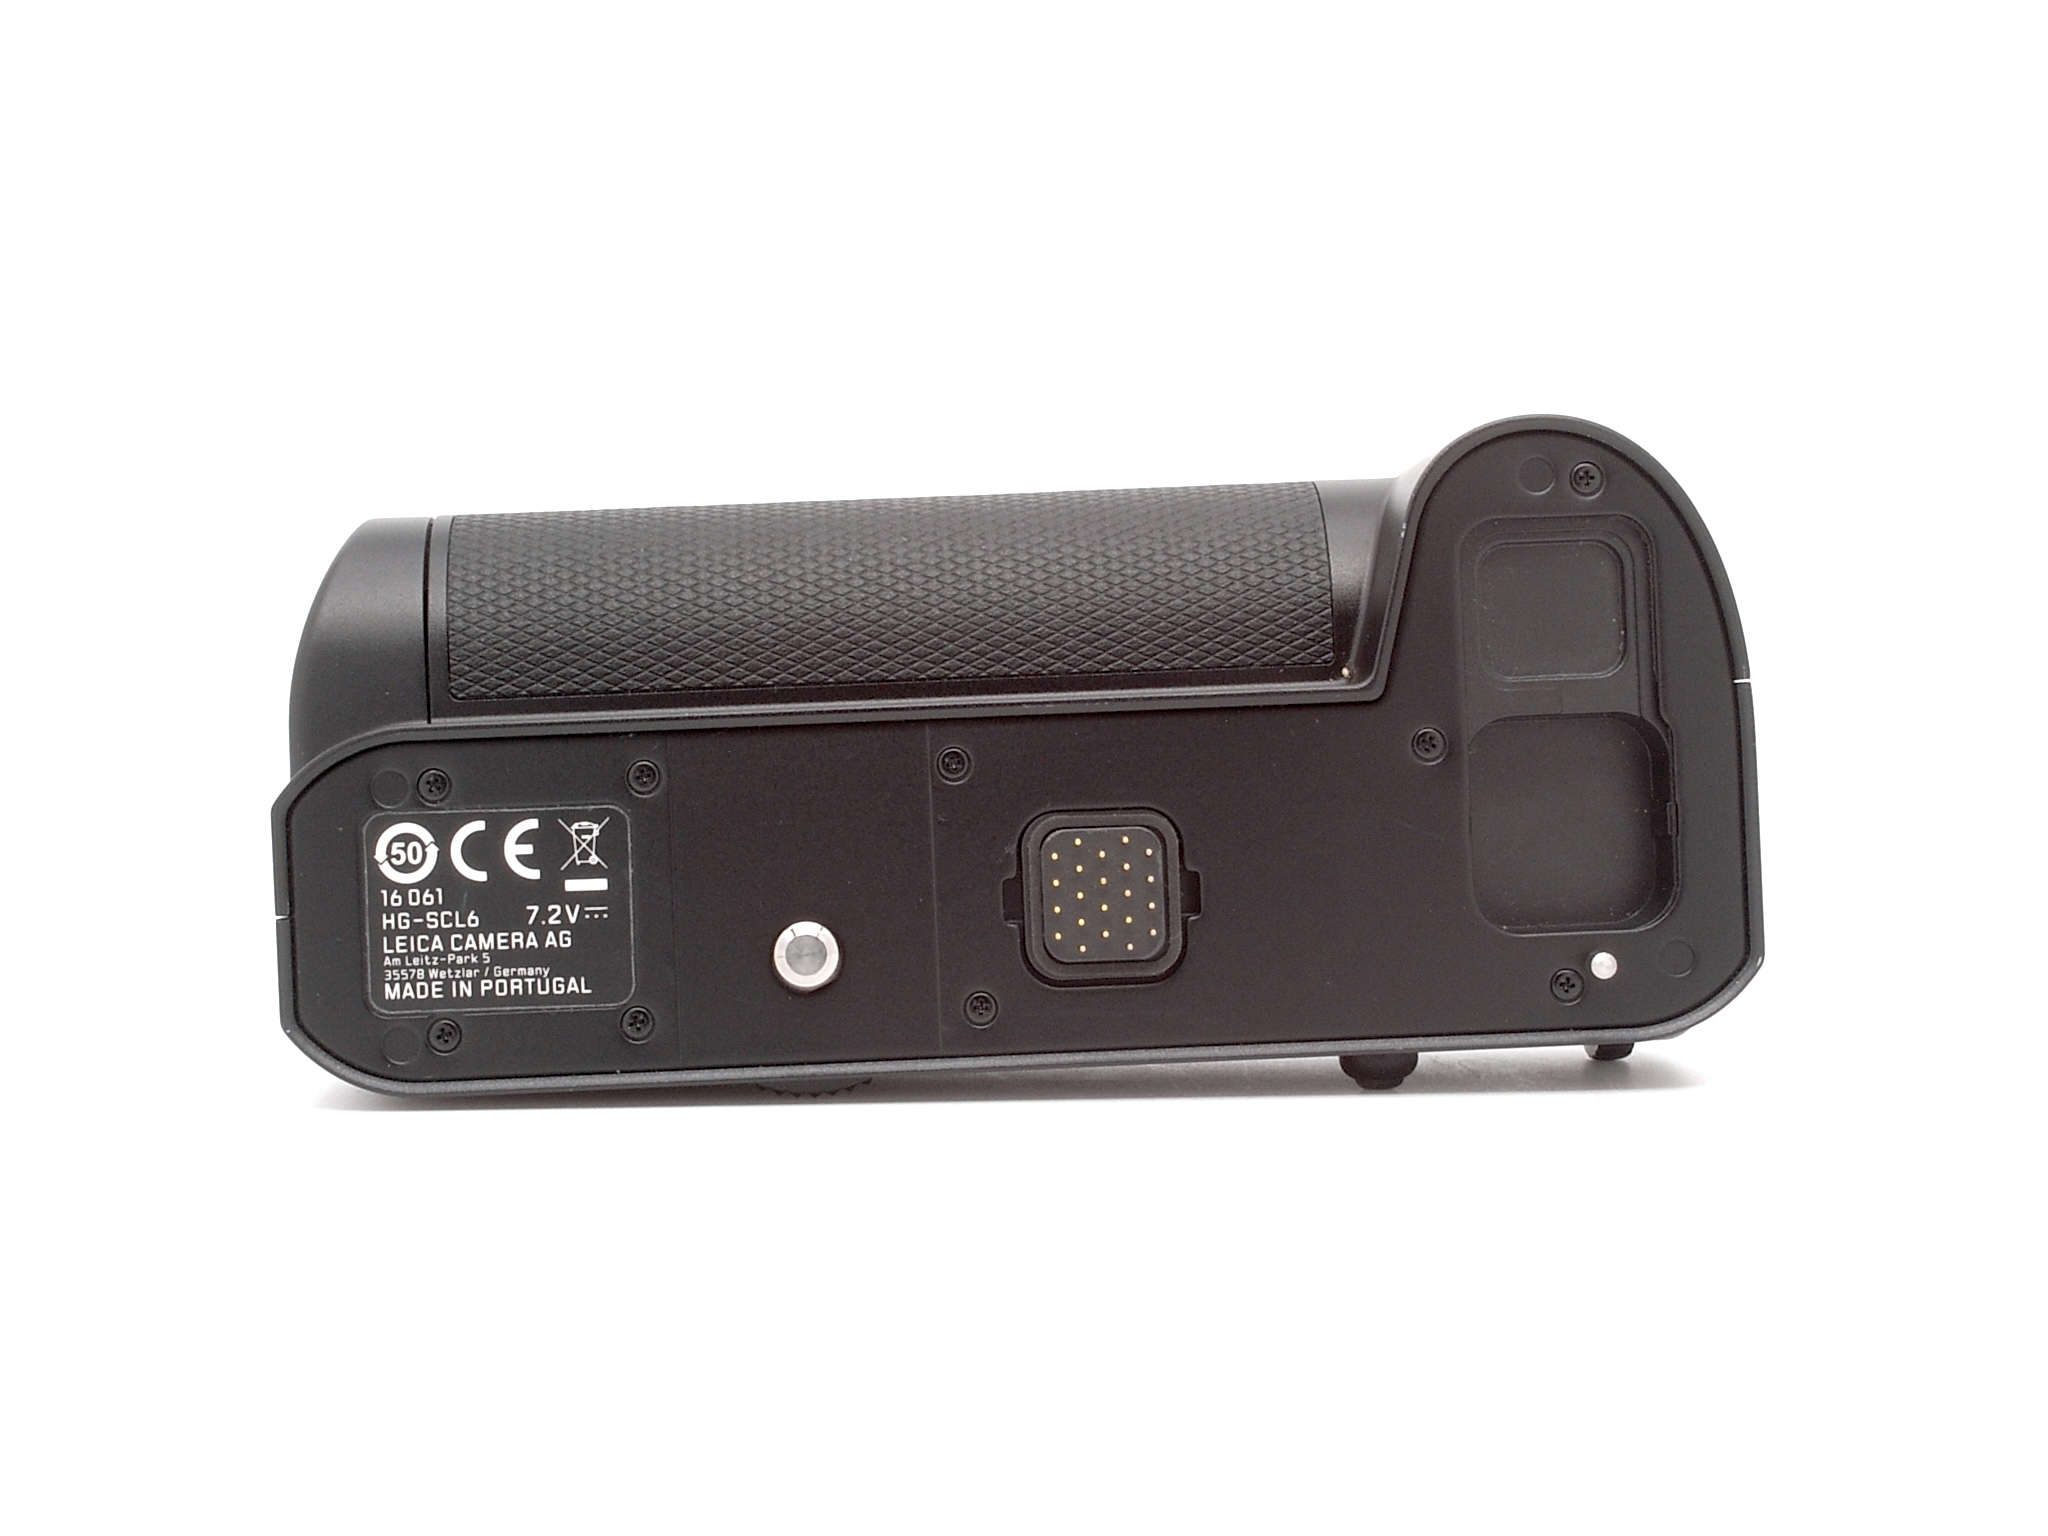 Leica Handgrip HG-SCL6 